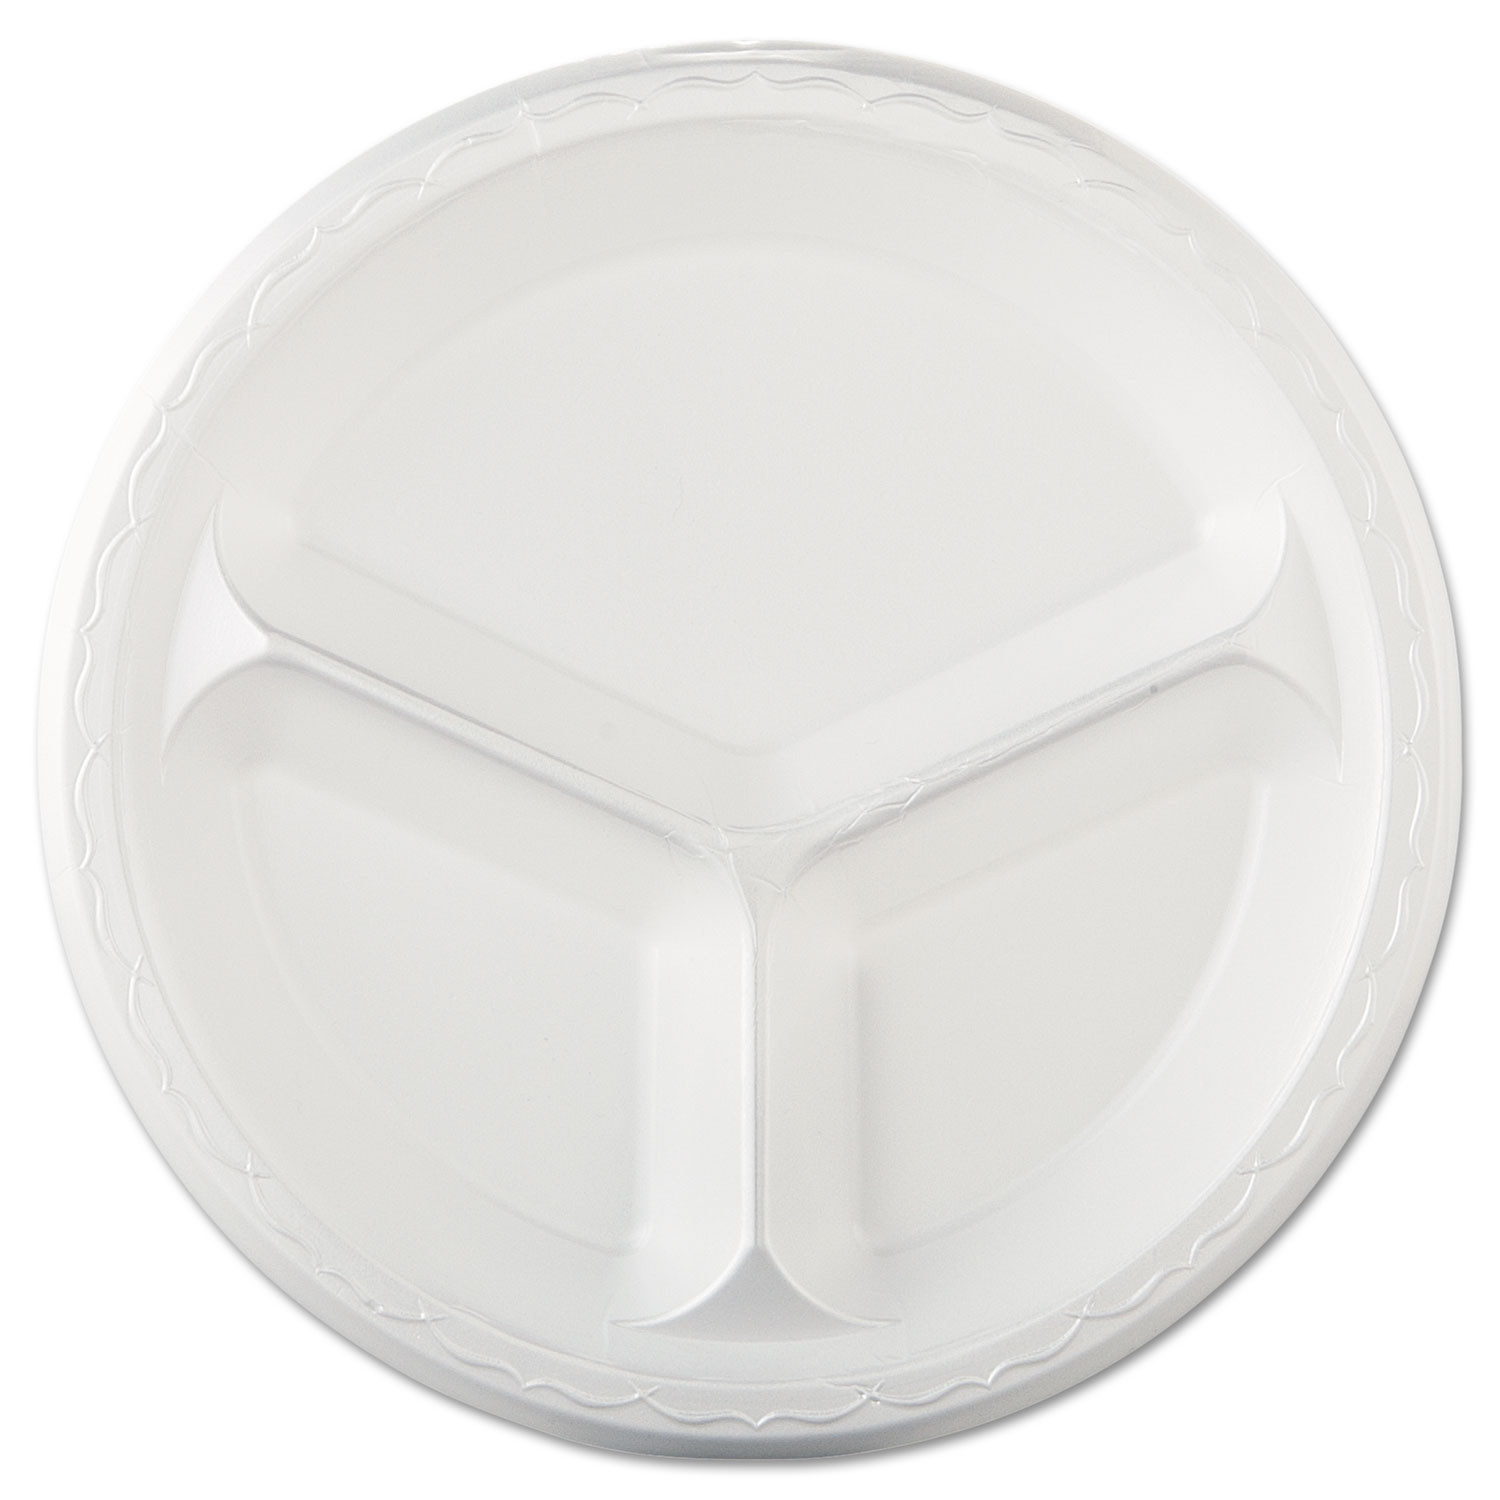  Genpak LAM13--- Elite Laminated Foam Dinnerware, 3-Comp Plate, 10.25Dia, White, 125/PK, 4 PK/CT (GNPLAM13) 